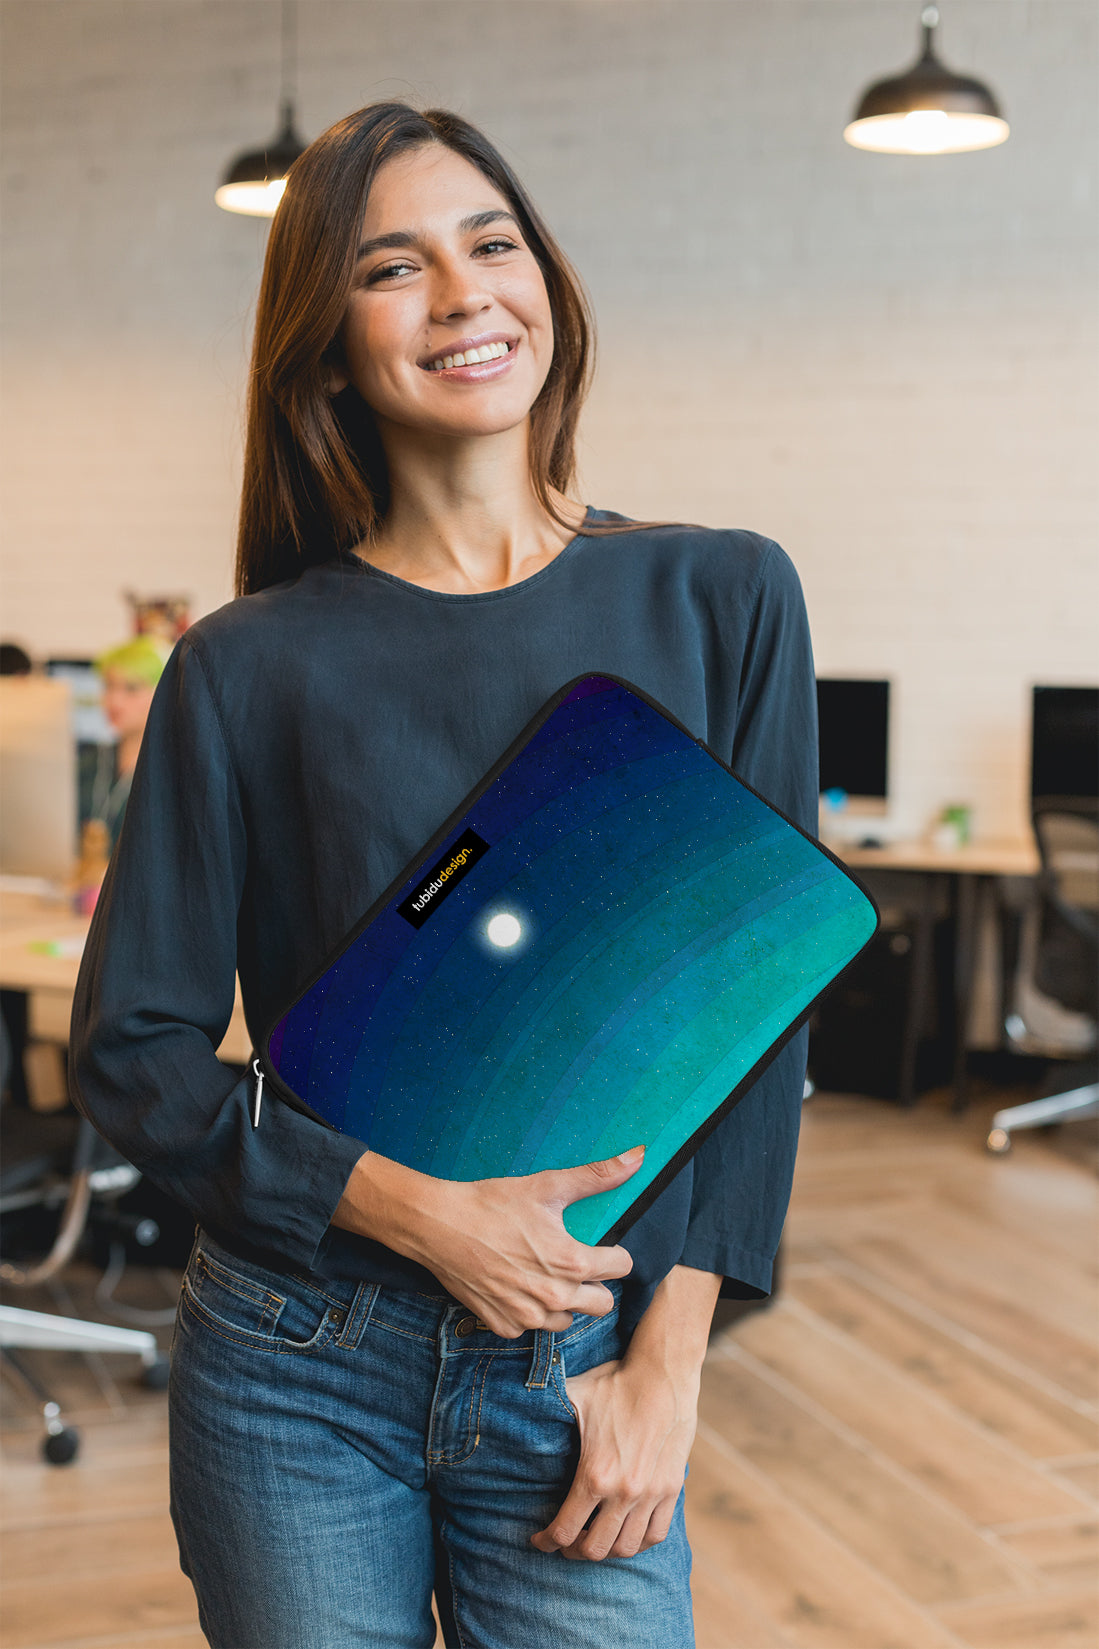 Moonlight - Illustrated Laptop Sleeve